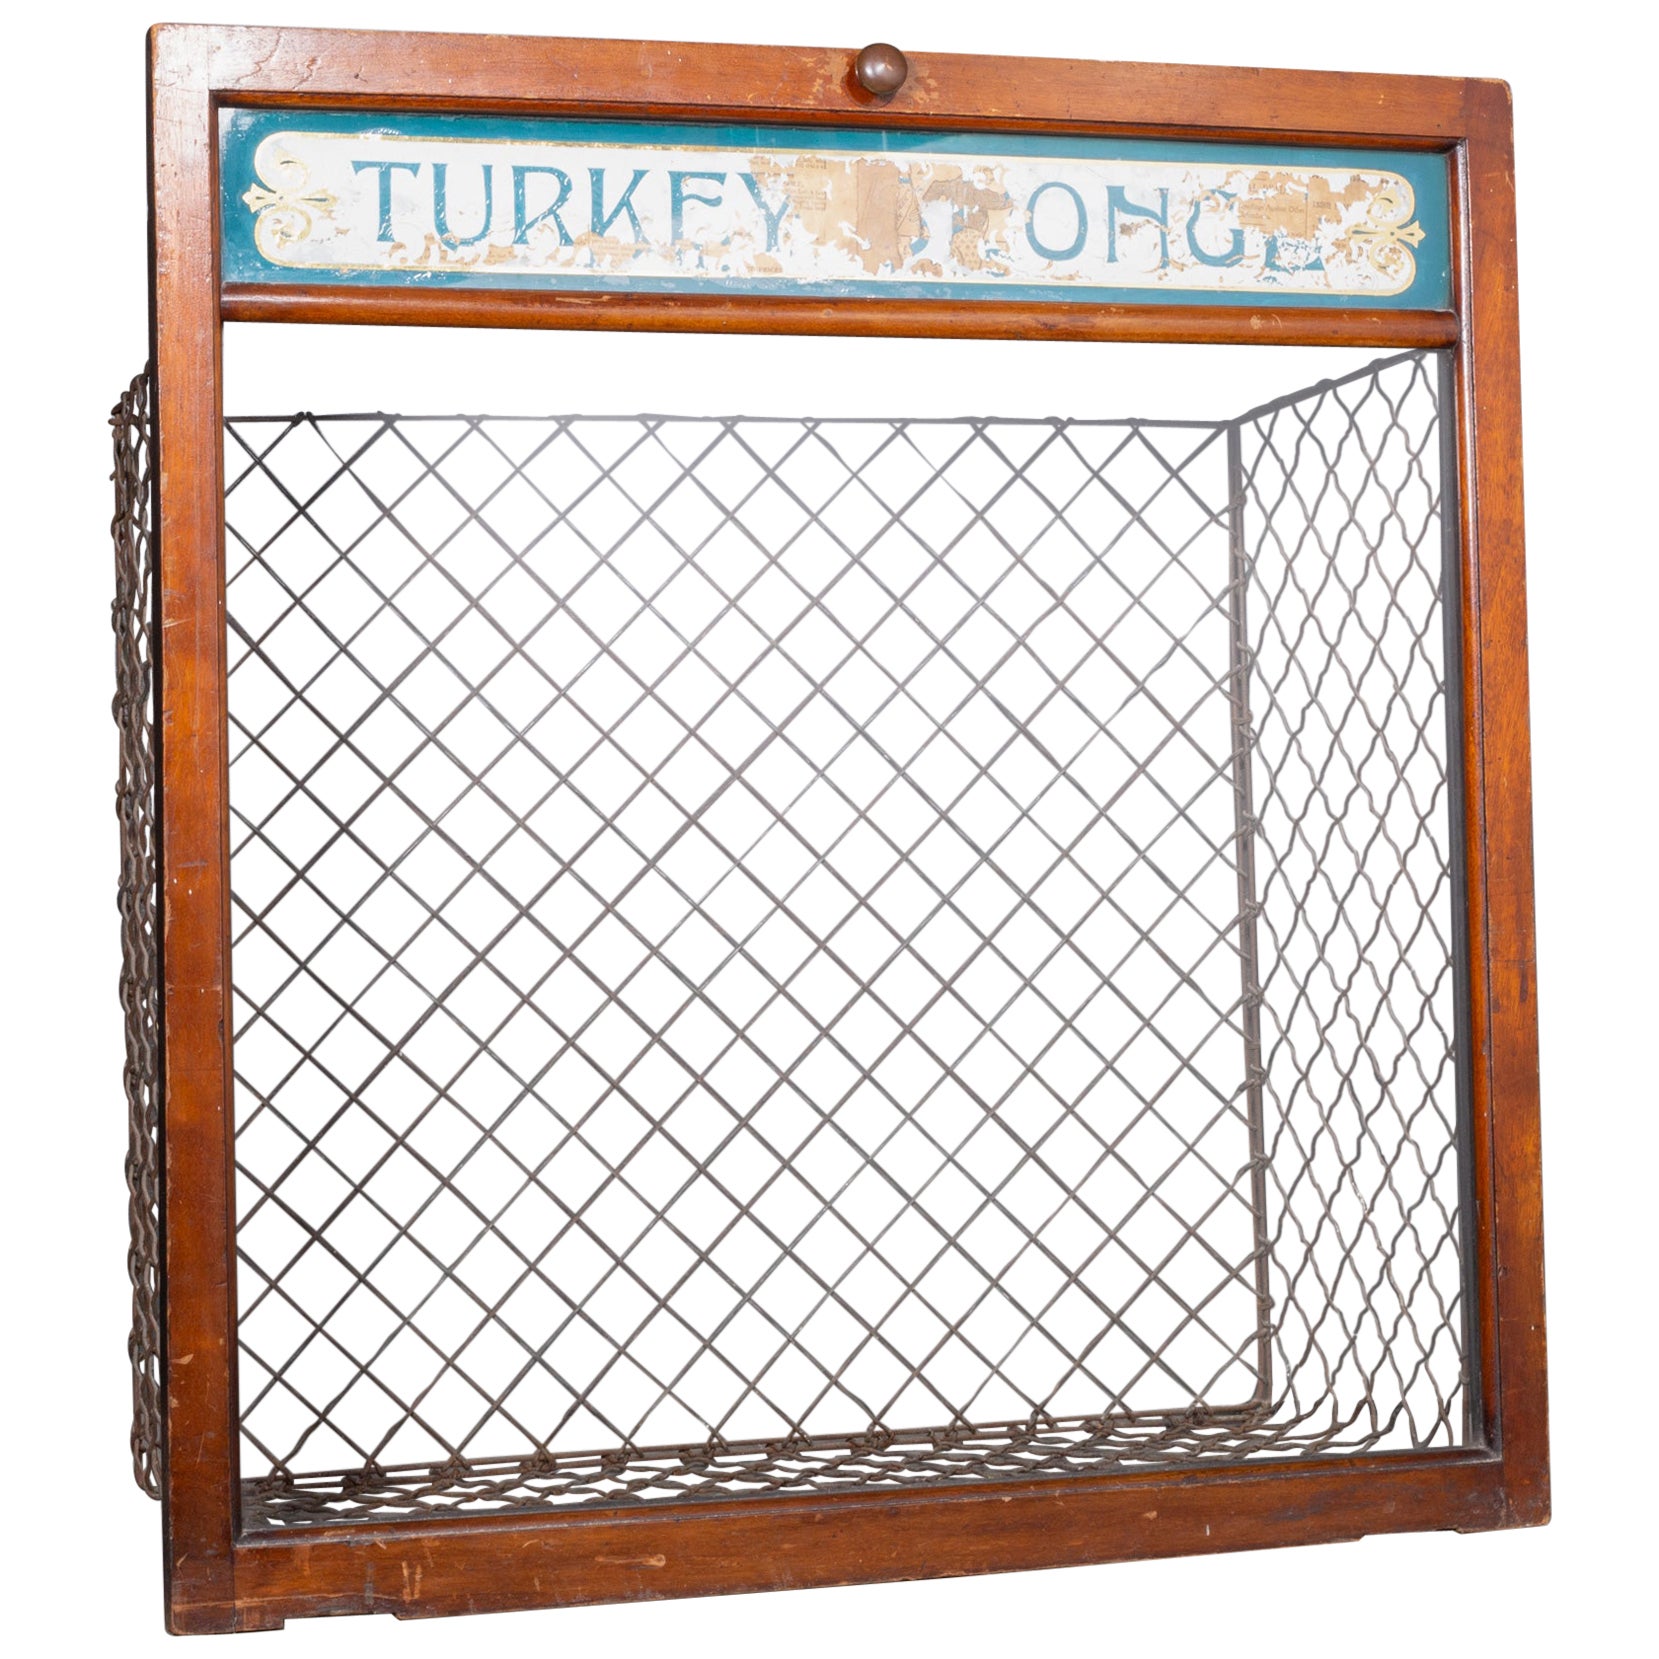 Anfang 20. Jh. Chemist Bin „Turkey Sponge“ von 1900-1940